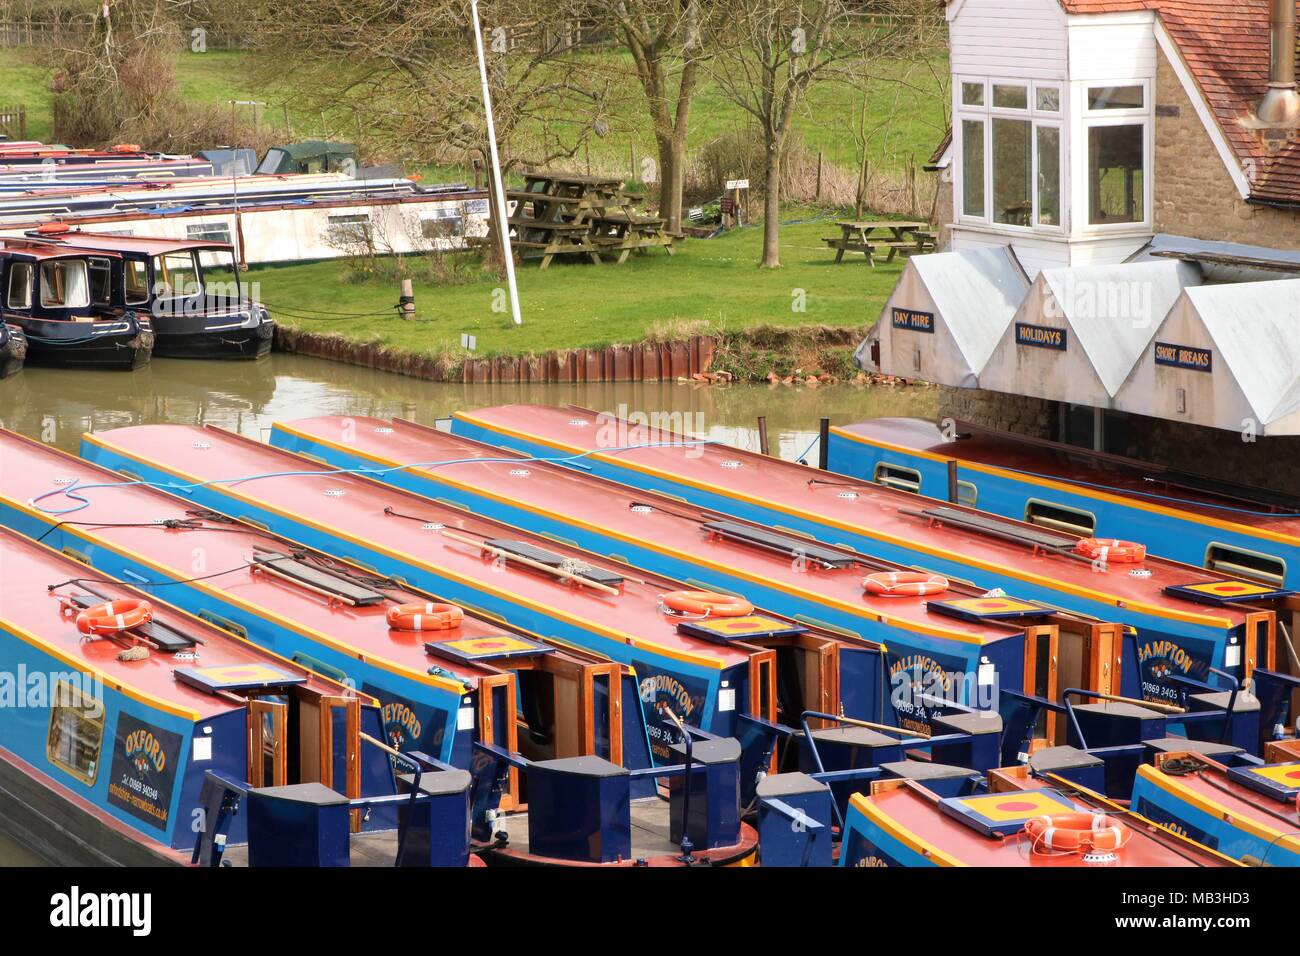 Barge / Canal boats at Heyford Wharf, Heyford, Oxfordshire, UK Stock Photo